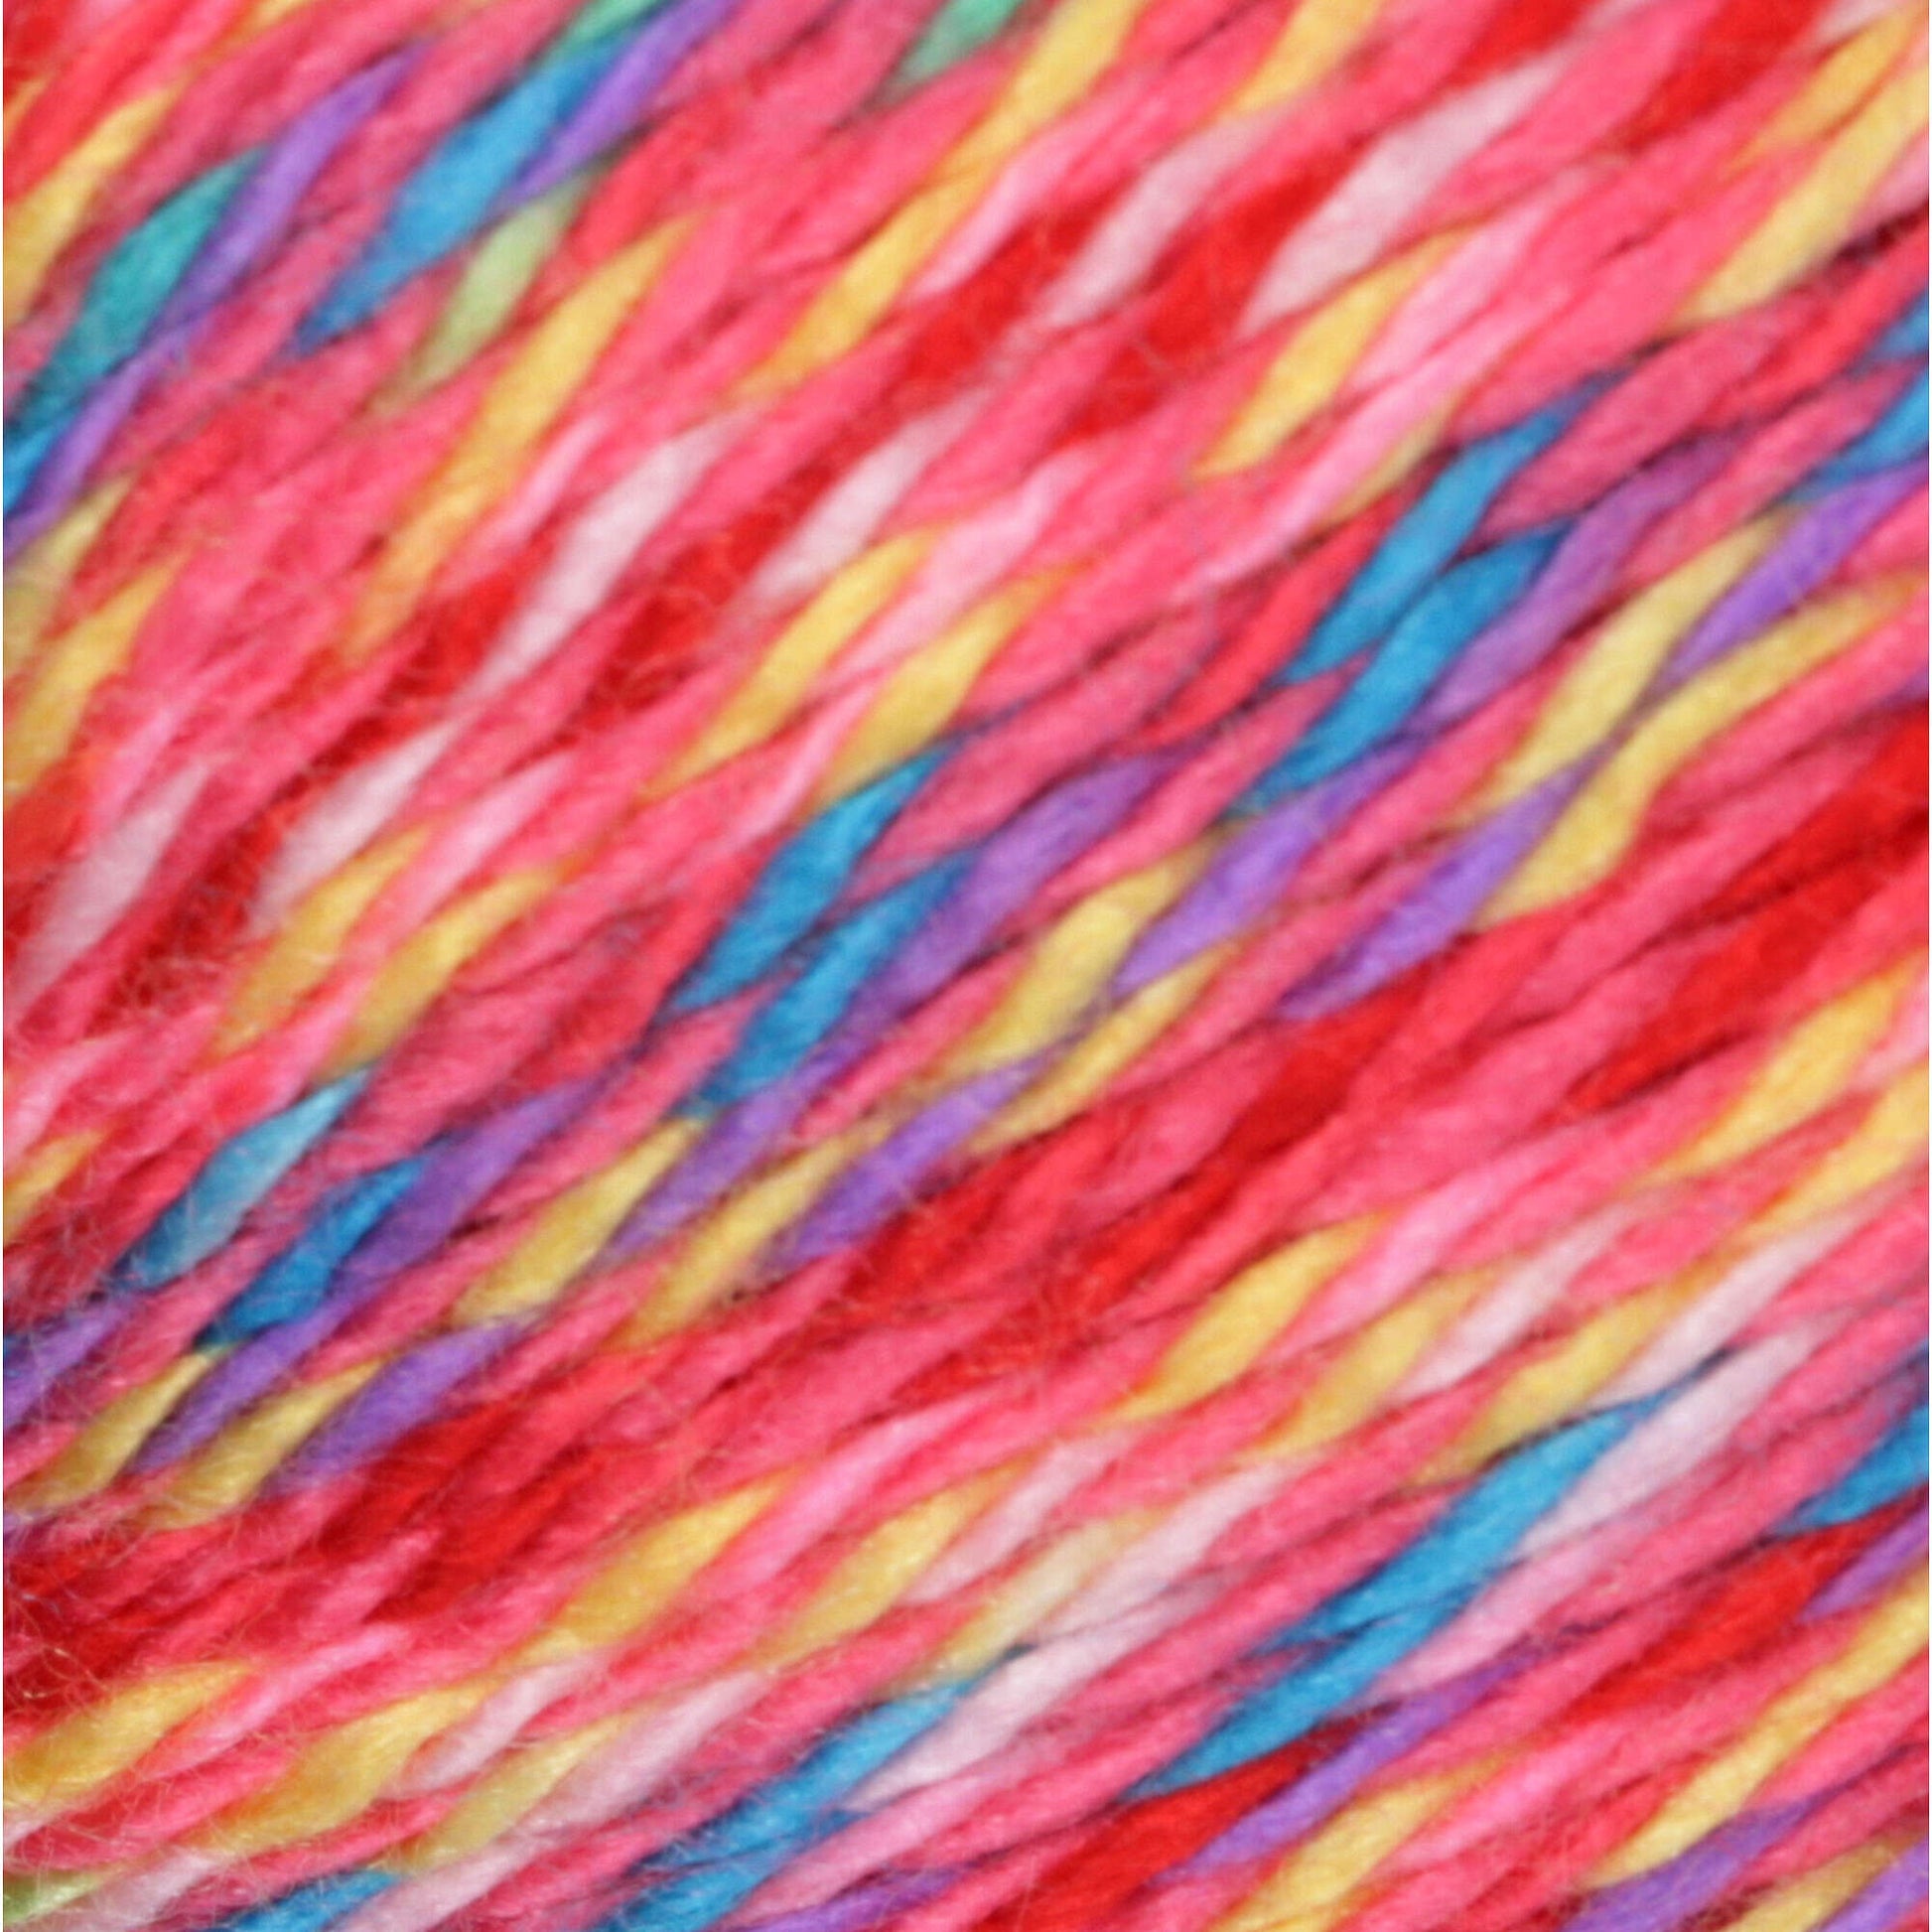 Bernat Softee Baby Colors Yarn - Discontinued Shades Pink Rainbow